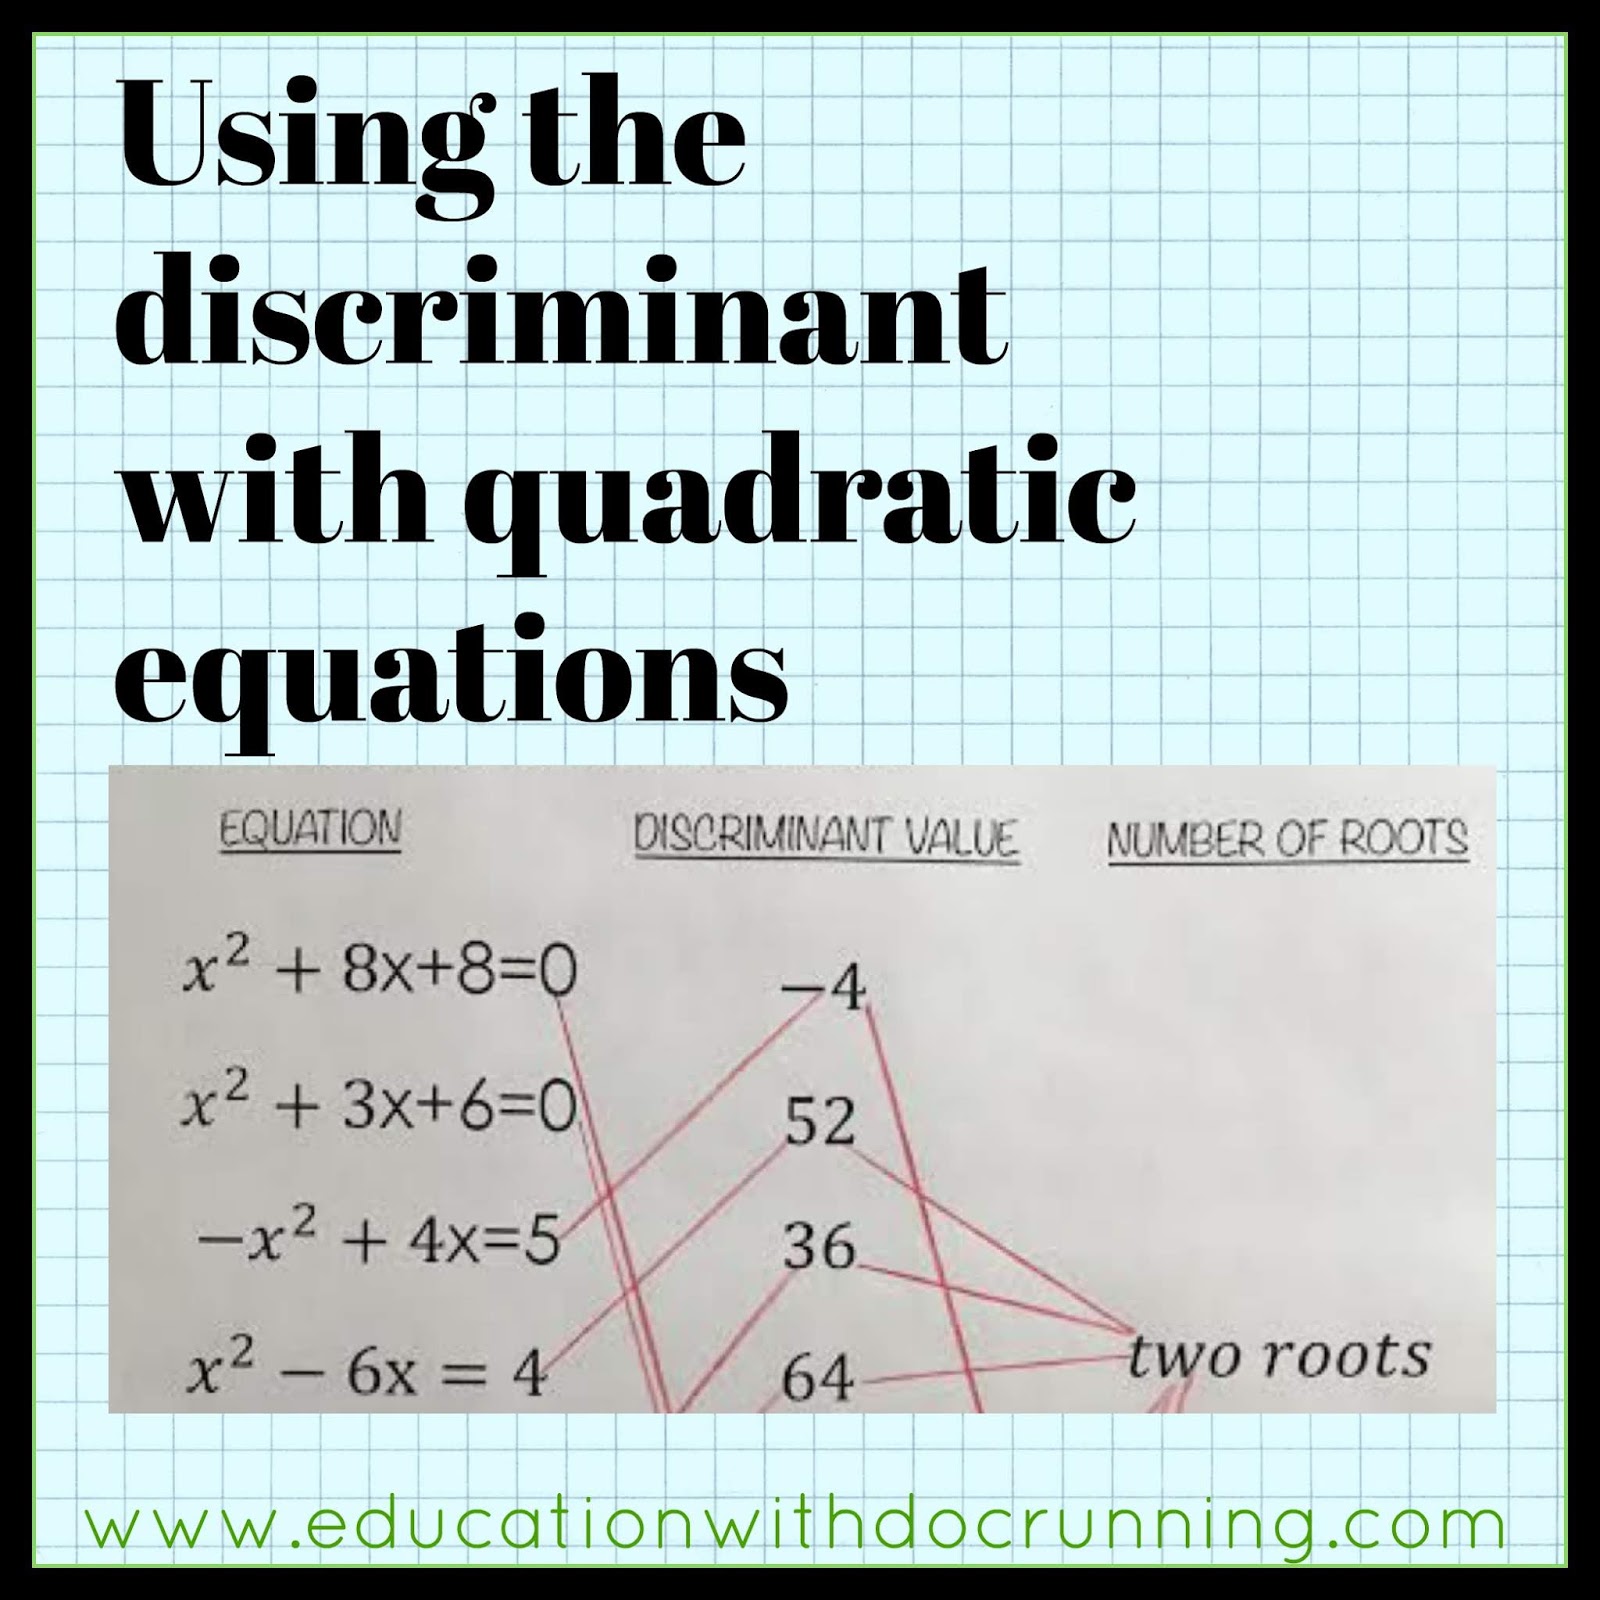 Math Mondays Quadratics In Algebra 2 Education With Docrunning